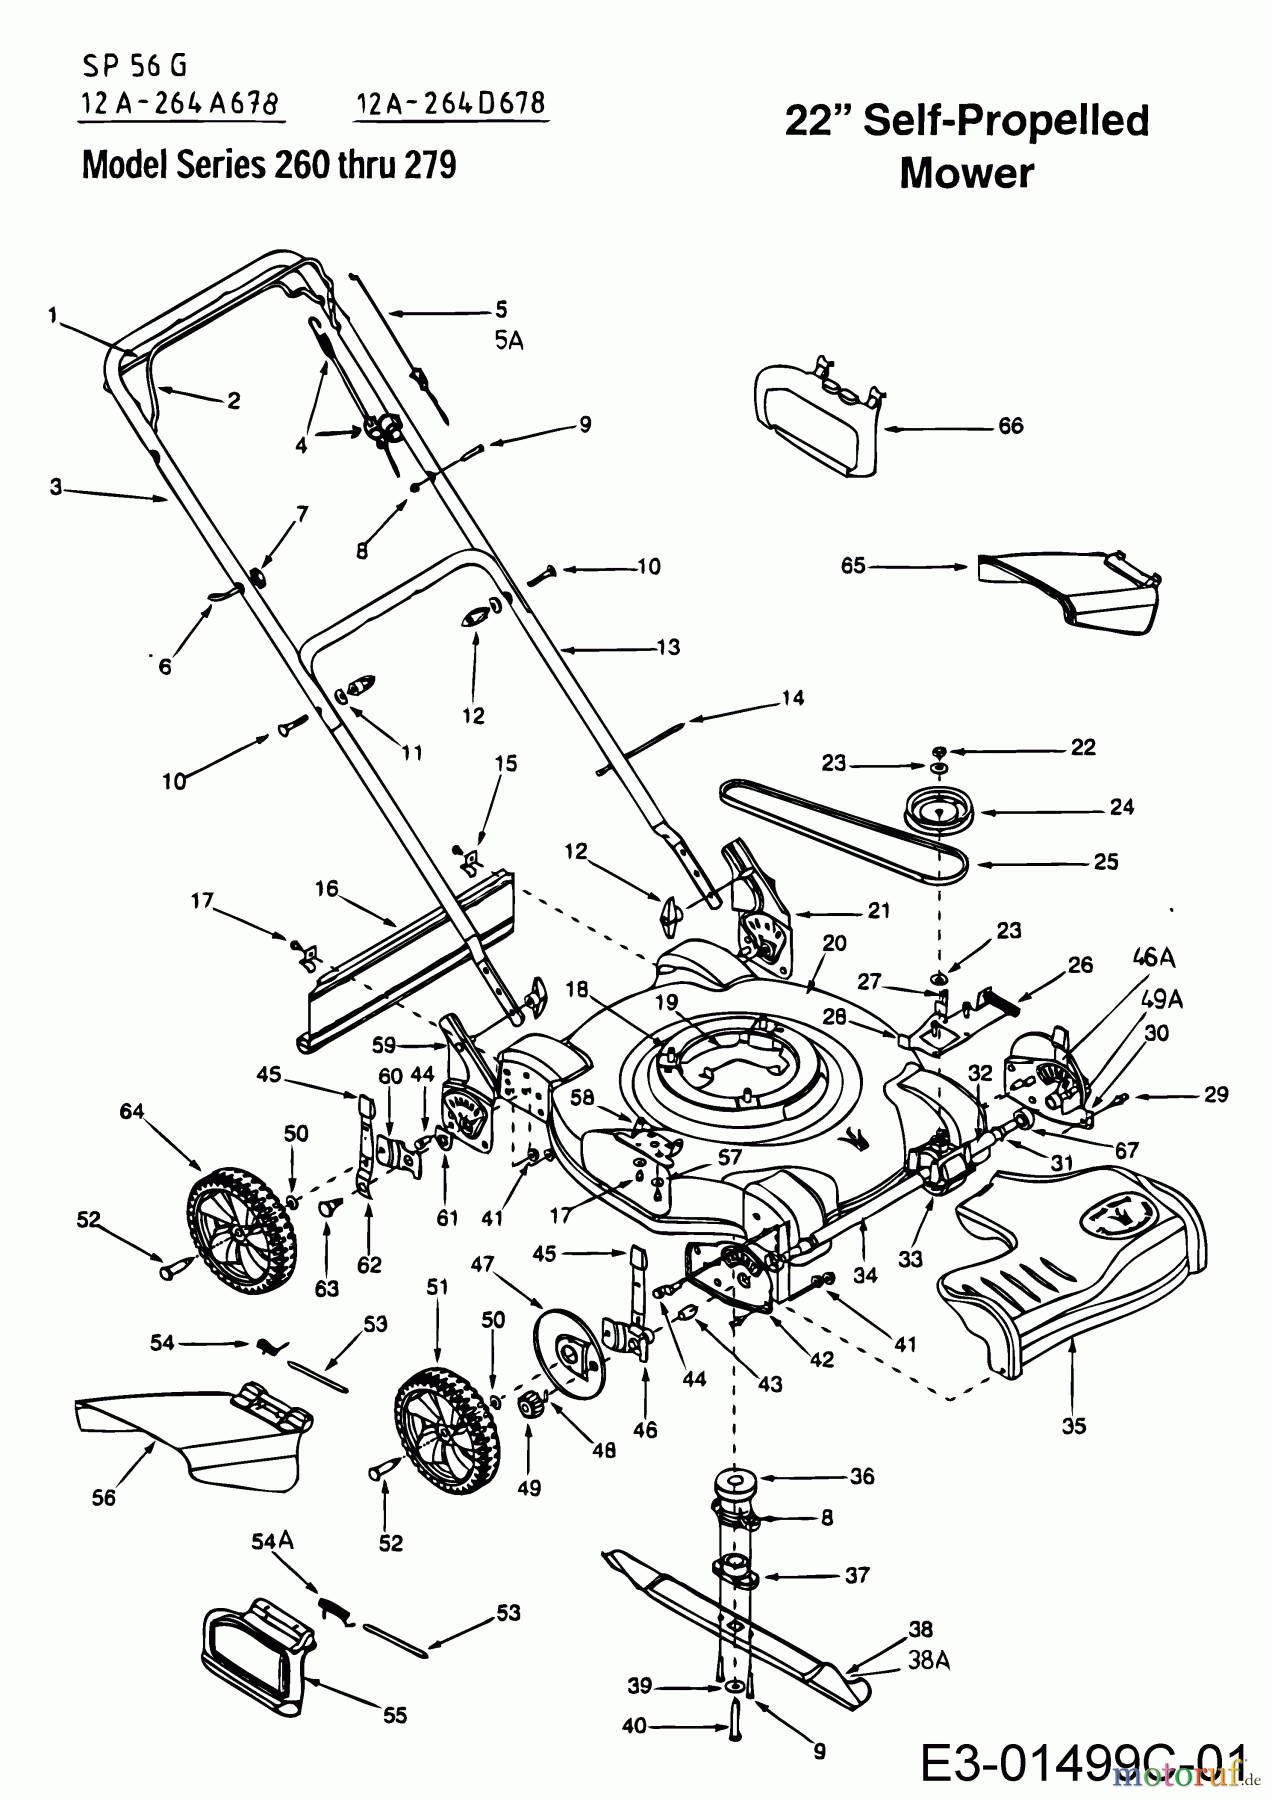  MTD Motormäher mit Antrieb SP 56 G 12A-264D678  (2002) Grundgerät